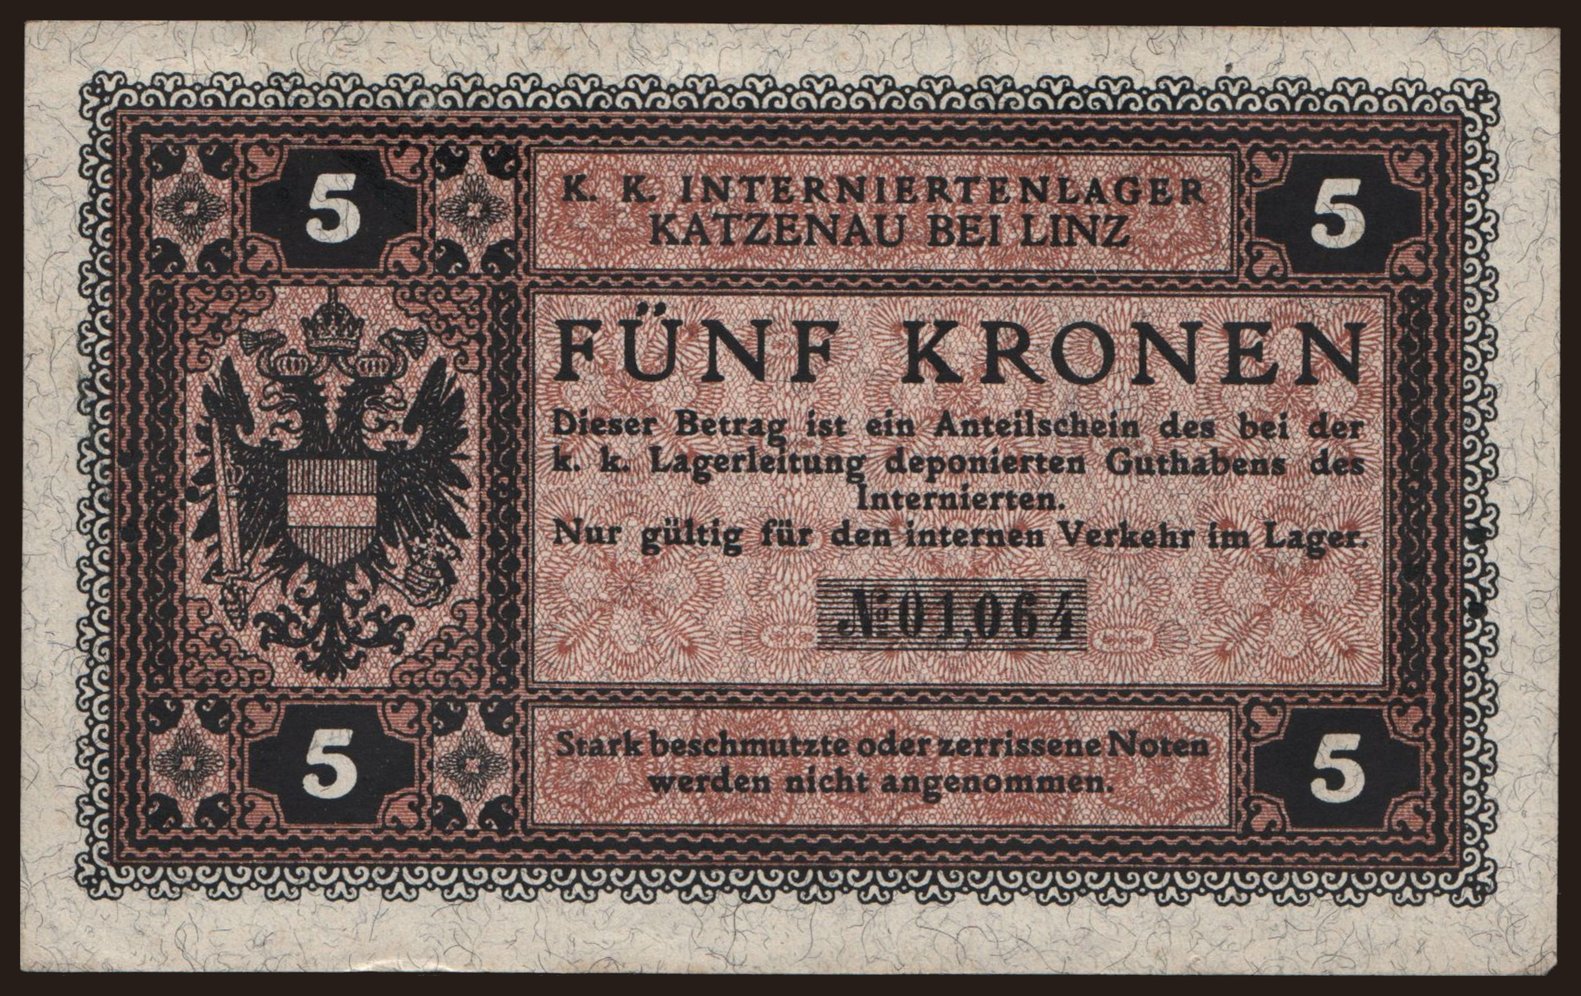 Katzenau bei Linz, 5 Kronen, 1916